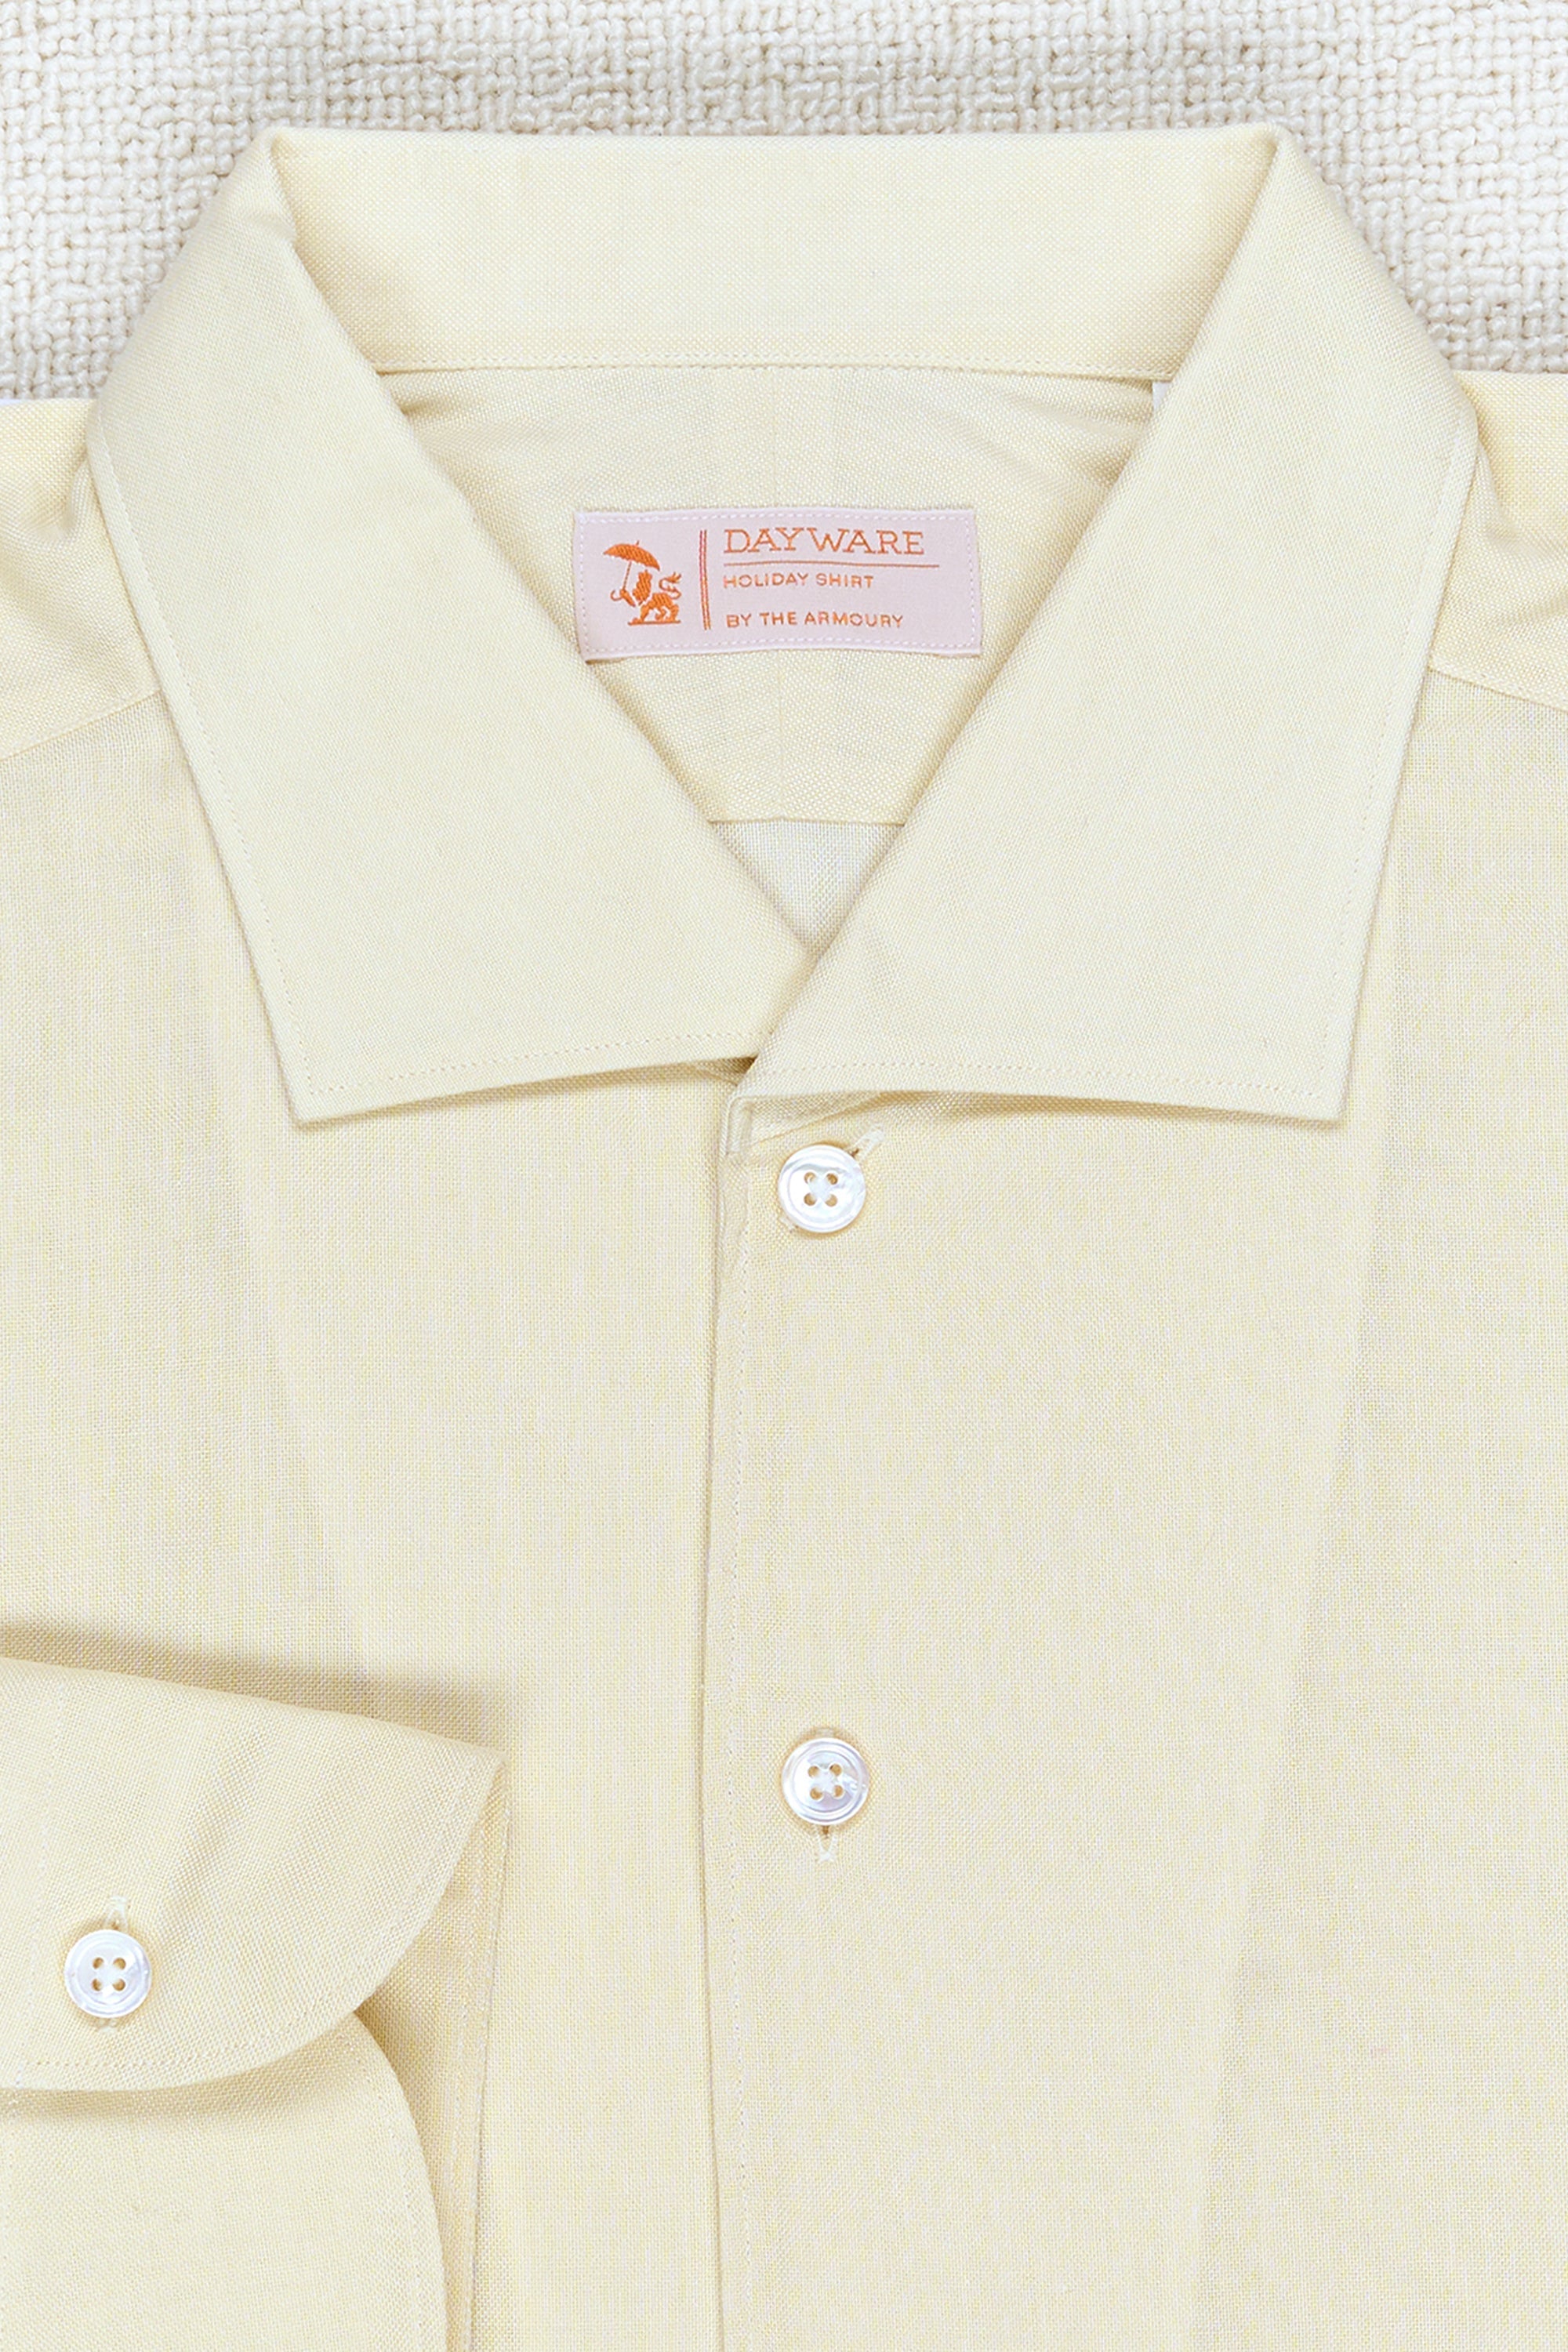 The Armoury Vintage Cream Cotton Holiday Shirt